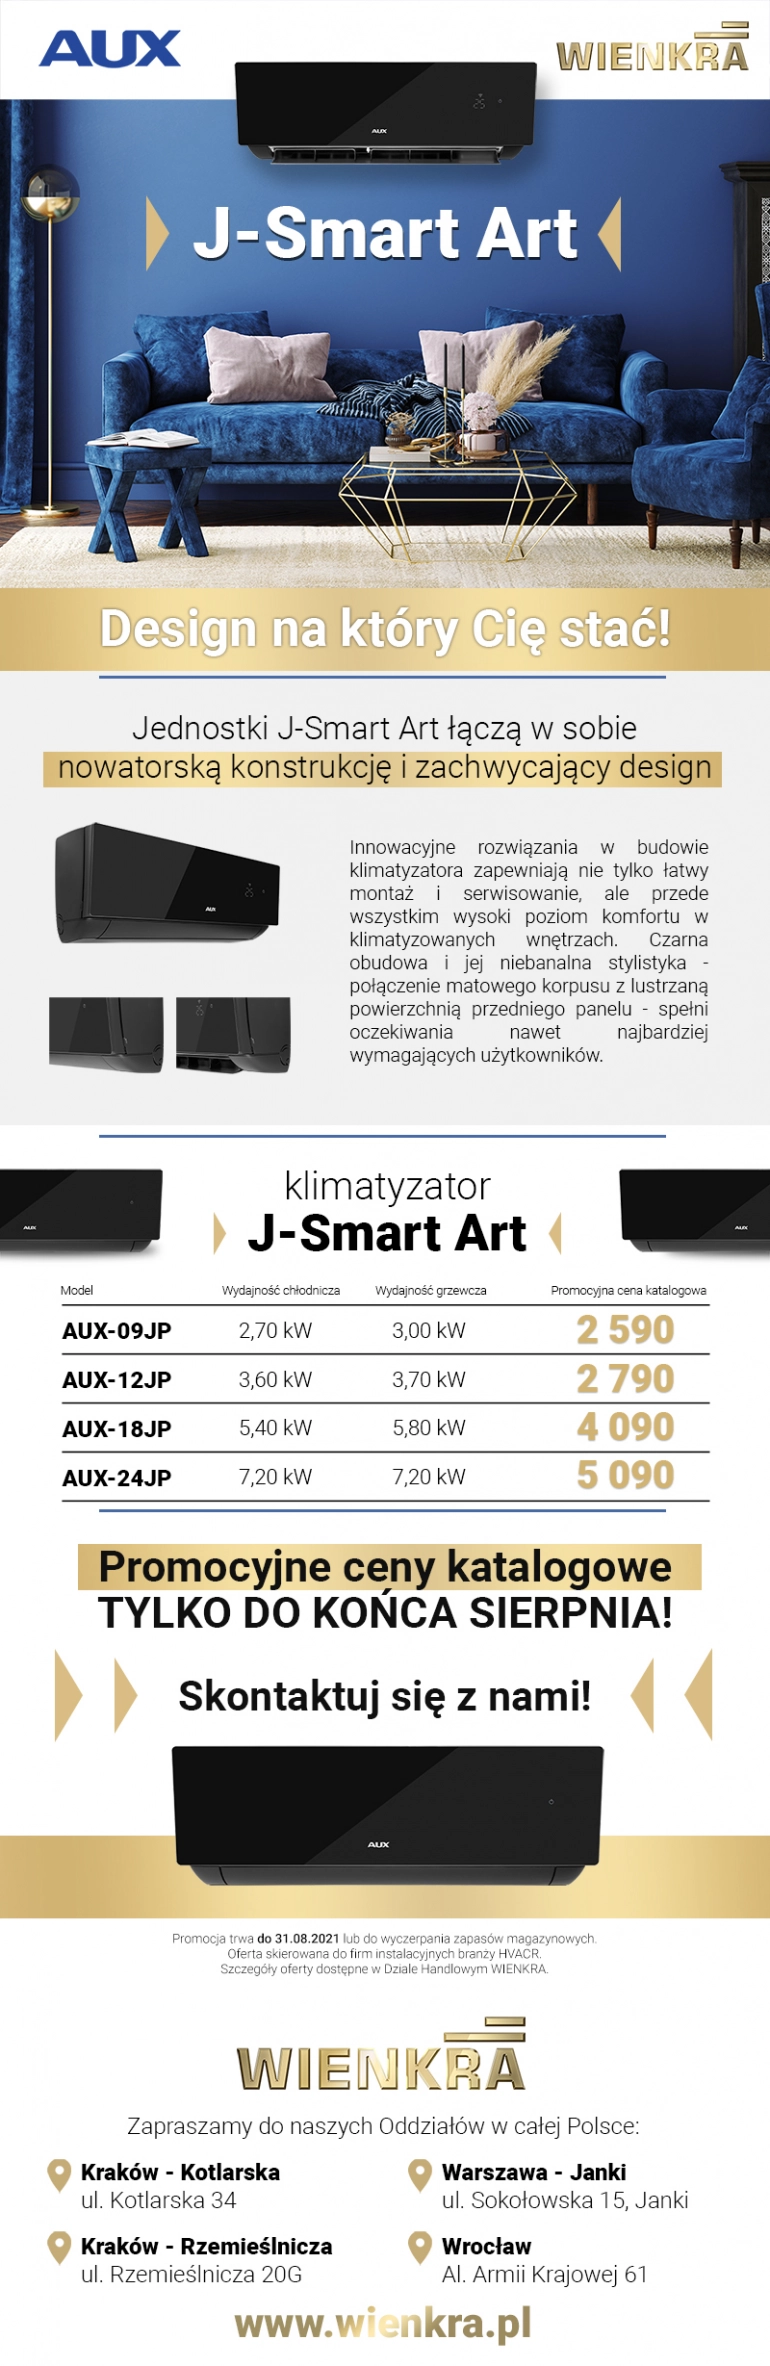 AUX J-Smart ART – promocyjne ceny katalogowe